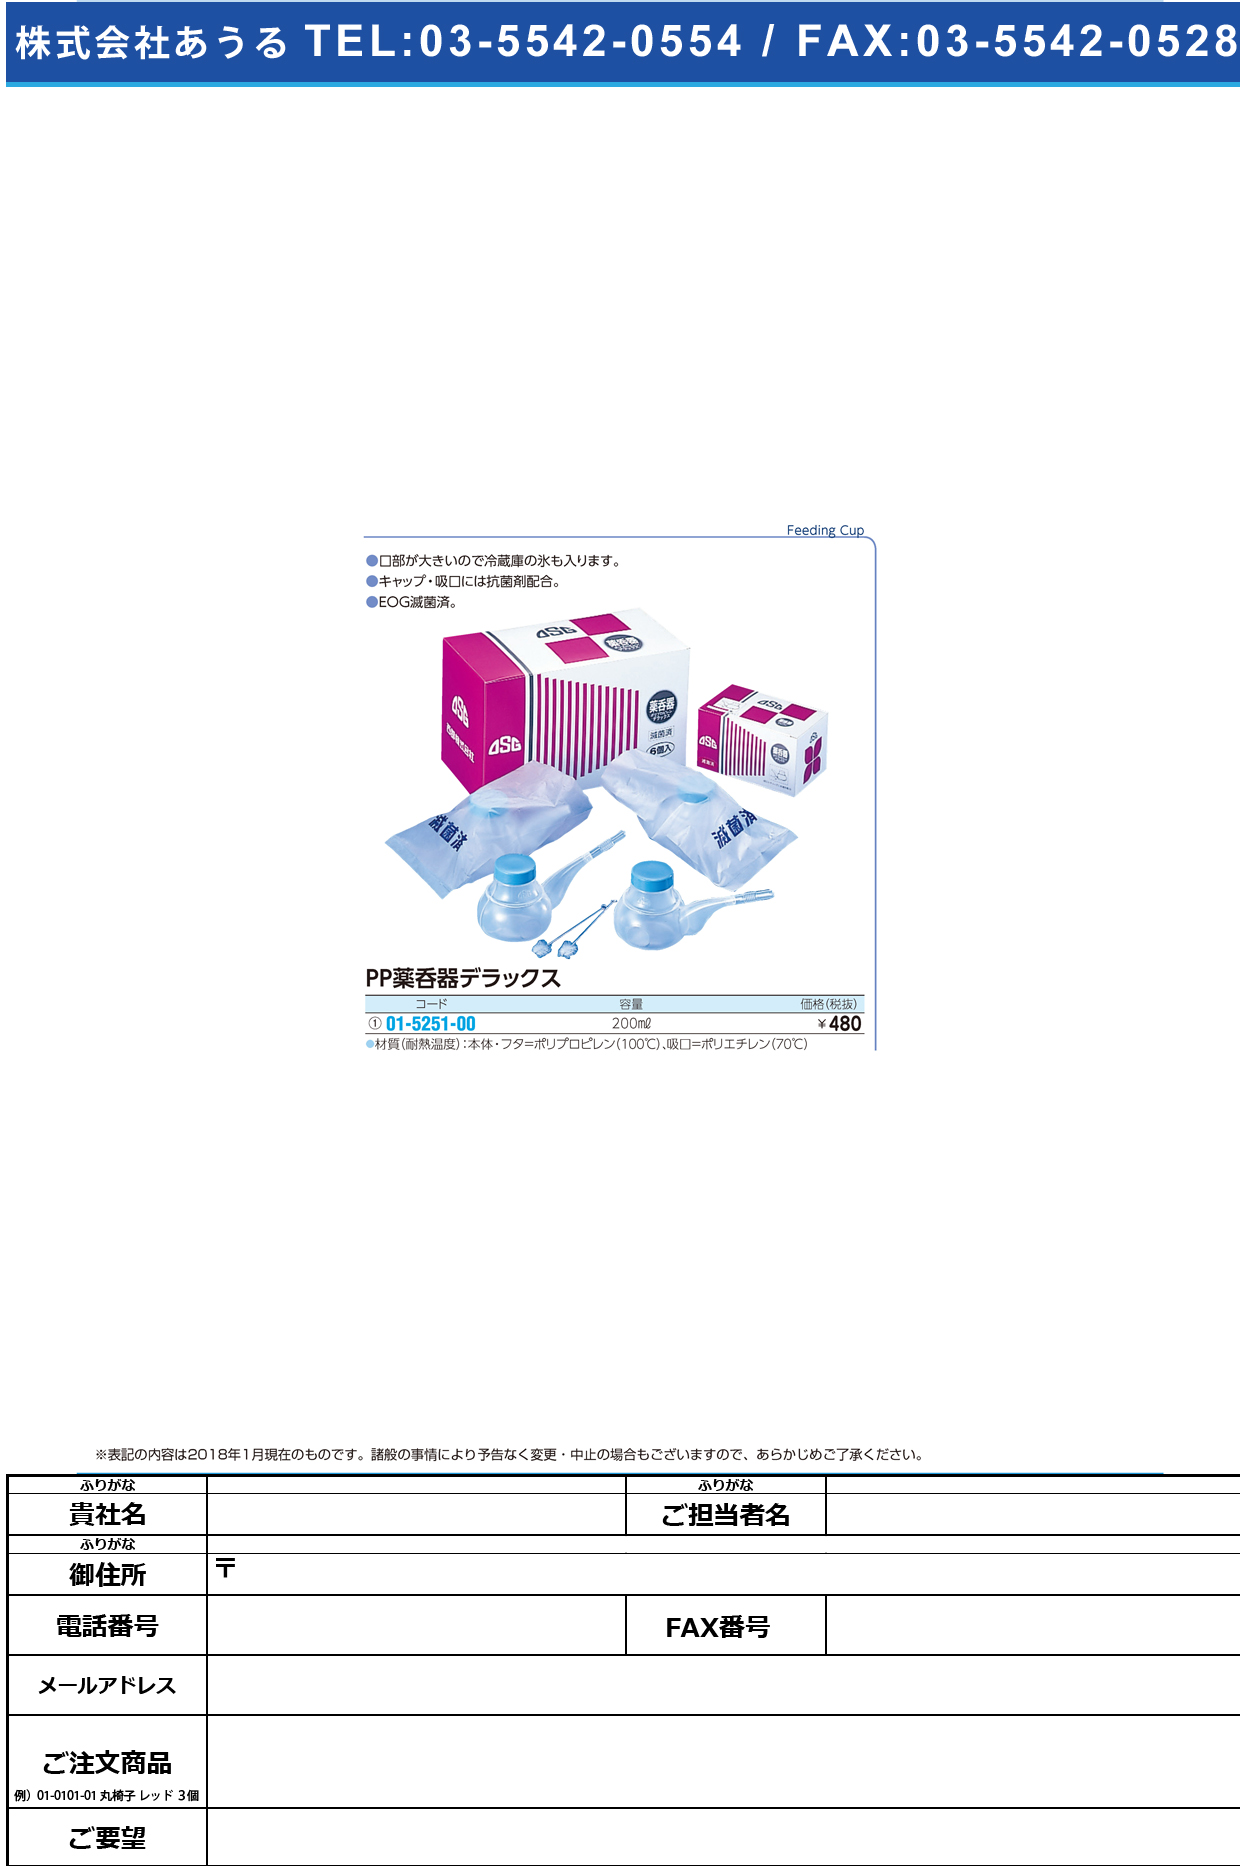 (01-5251-00)ＯＳＧＰＰ薬呑器デラックス 200ML(ﾒｯｷﾝｽﾞﾐ) PPﾔｸﾉﾐｷﾃﾞﾗｯｸｽ【1個単位】【2019年カタログ商品】